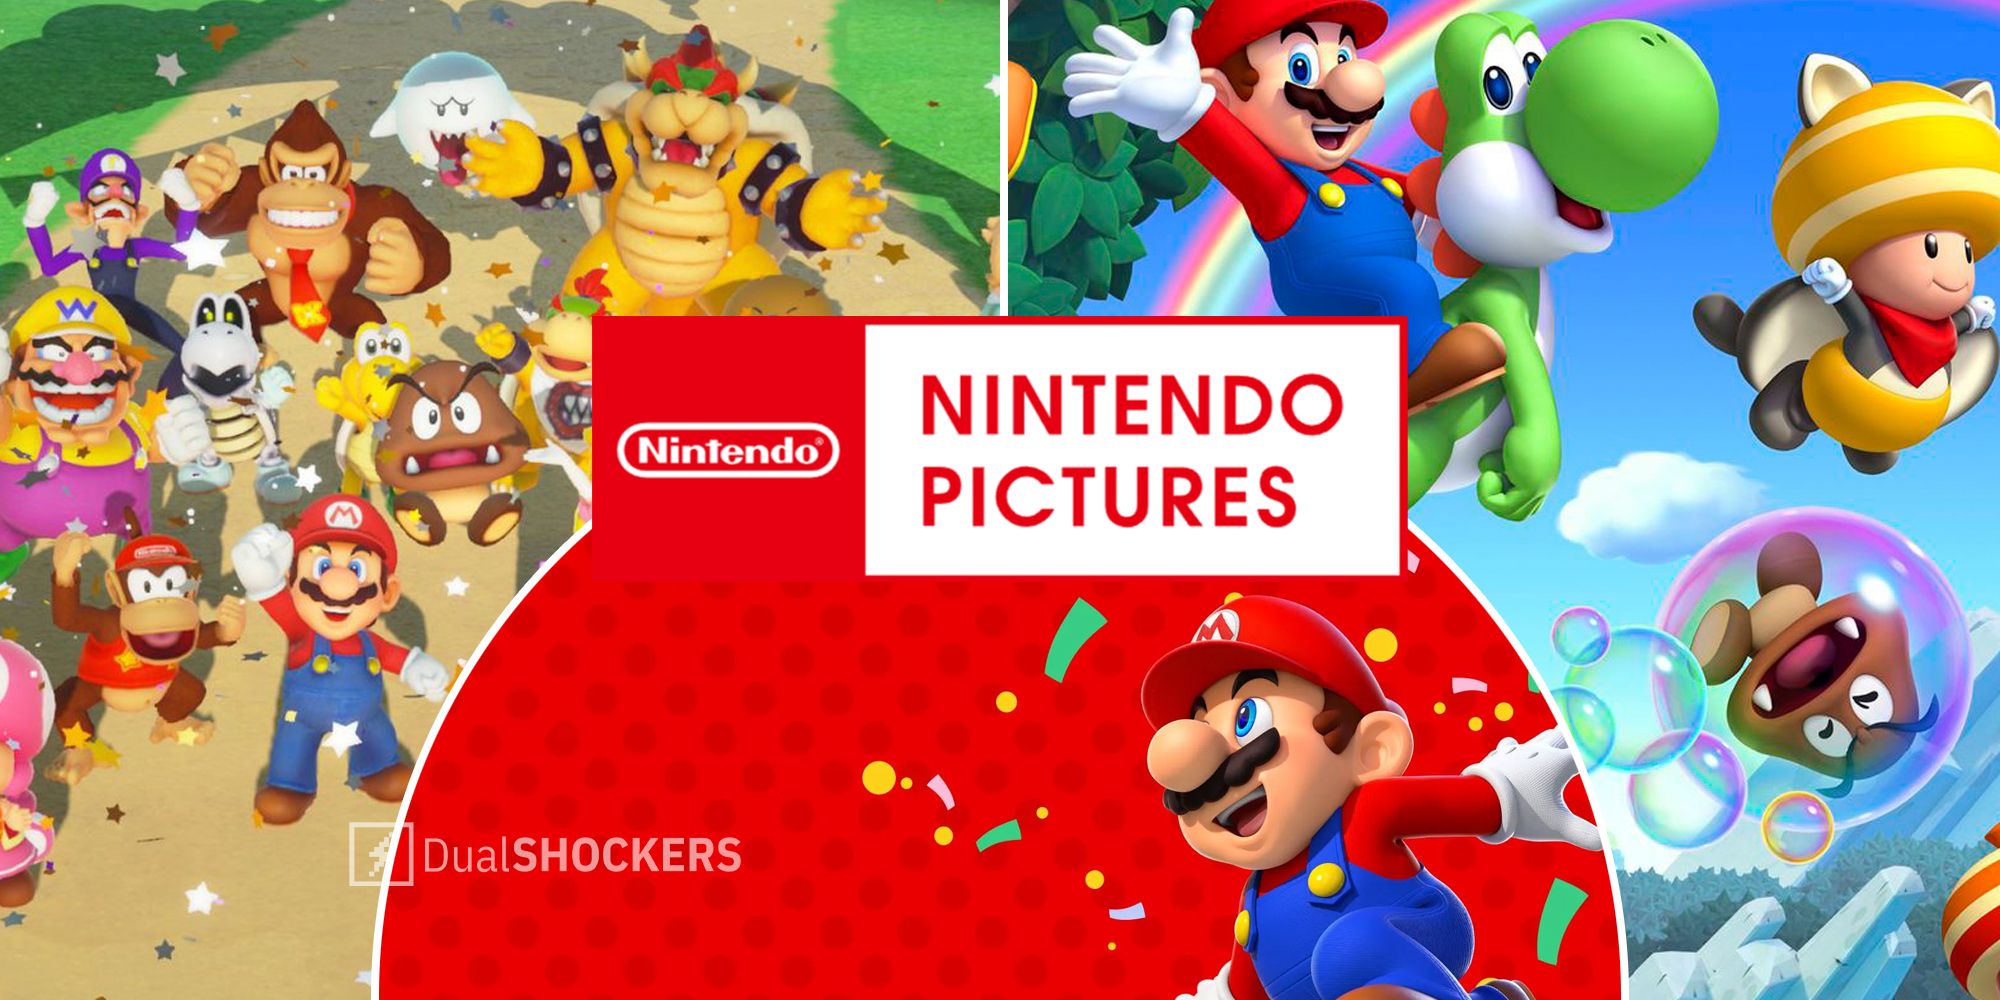 Nintendo Launches Animation Studio Nintendo Pictures Super Mario characters Mario, Luigi, Toad, Bowser, Diddy Kong, Wario, Dry Bones, Waluigi, Boo, Goomba, Donkey Kong